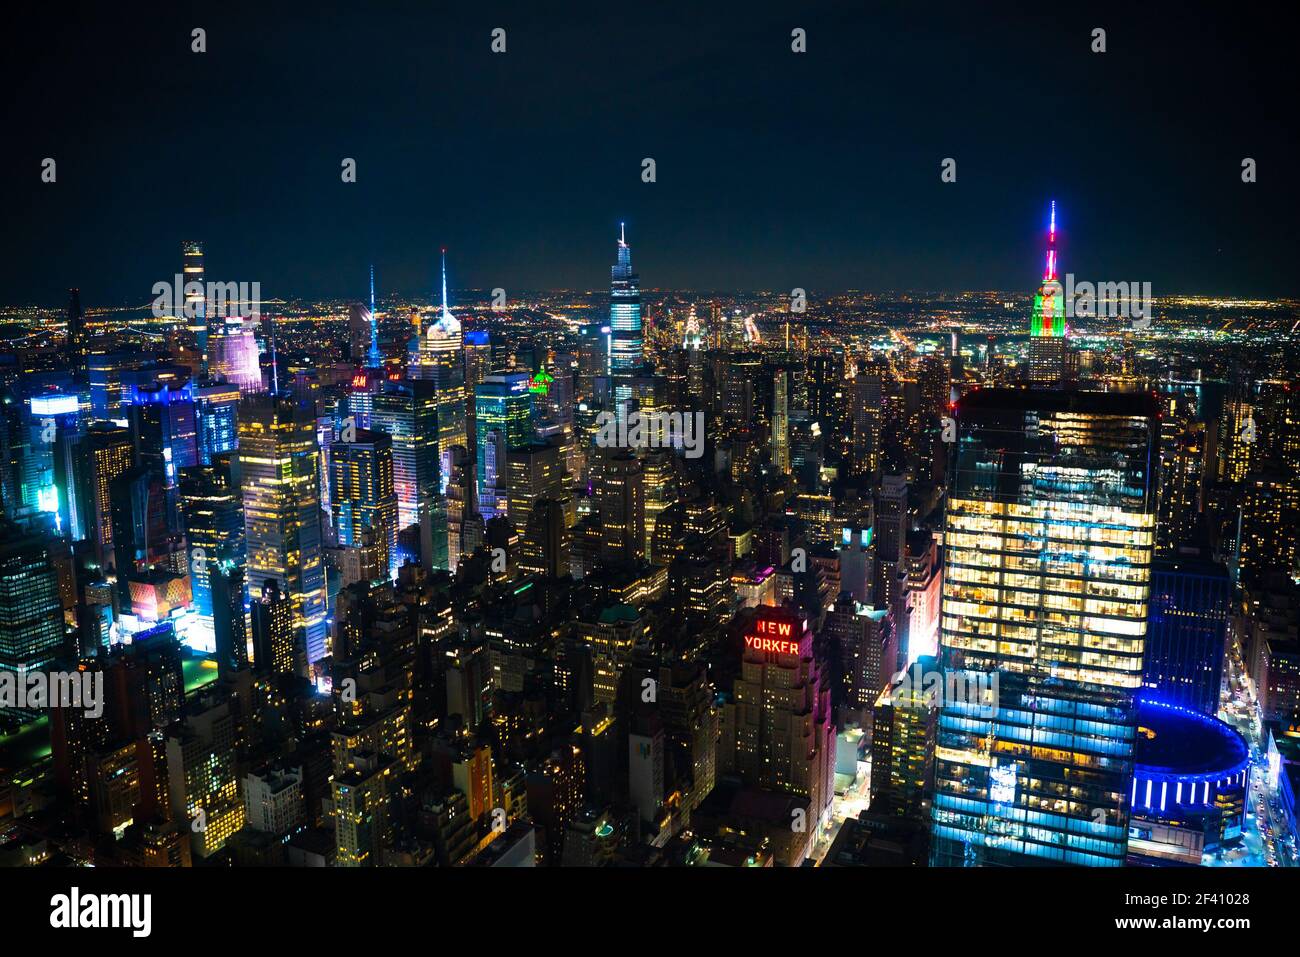 Night scene across the city of Manhattan, New York City with many illuminated buildings on a dark night Stock Photo